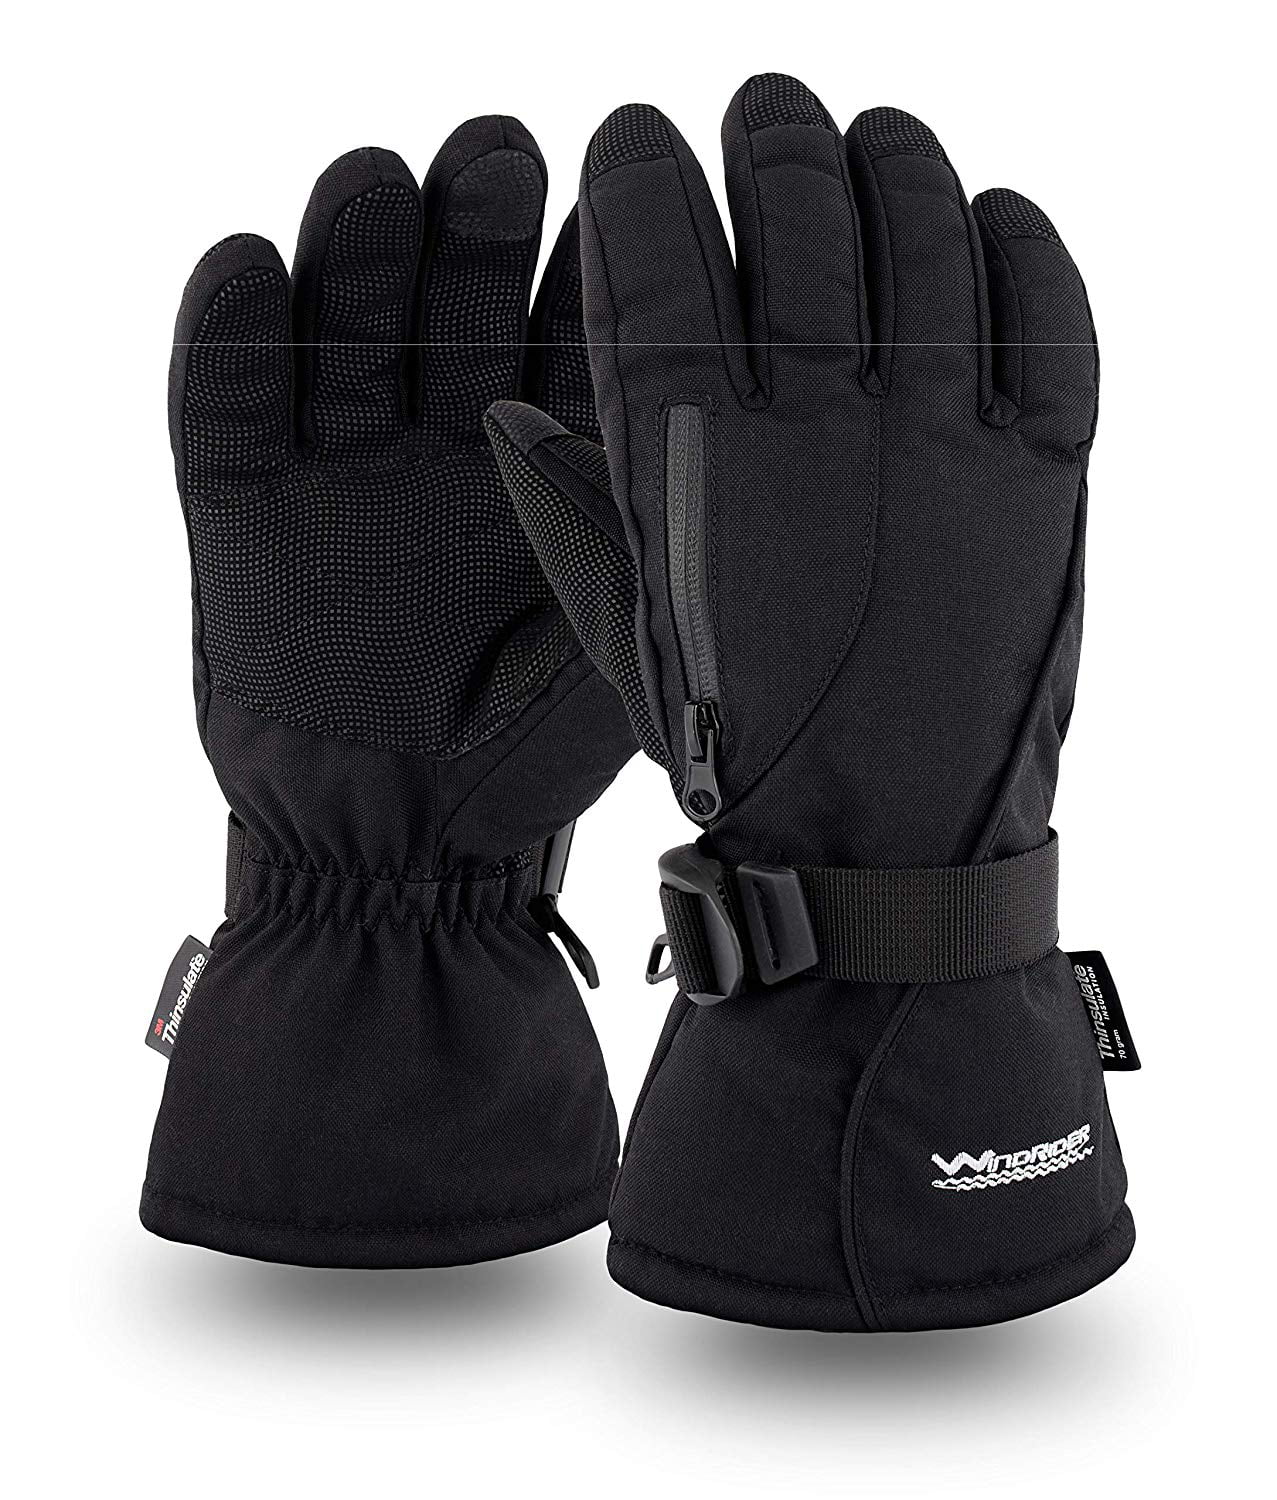 Gloves Womens M Rugged Wear Ski Winter Snow Waterproof Insert Medium Pink new 